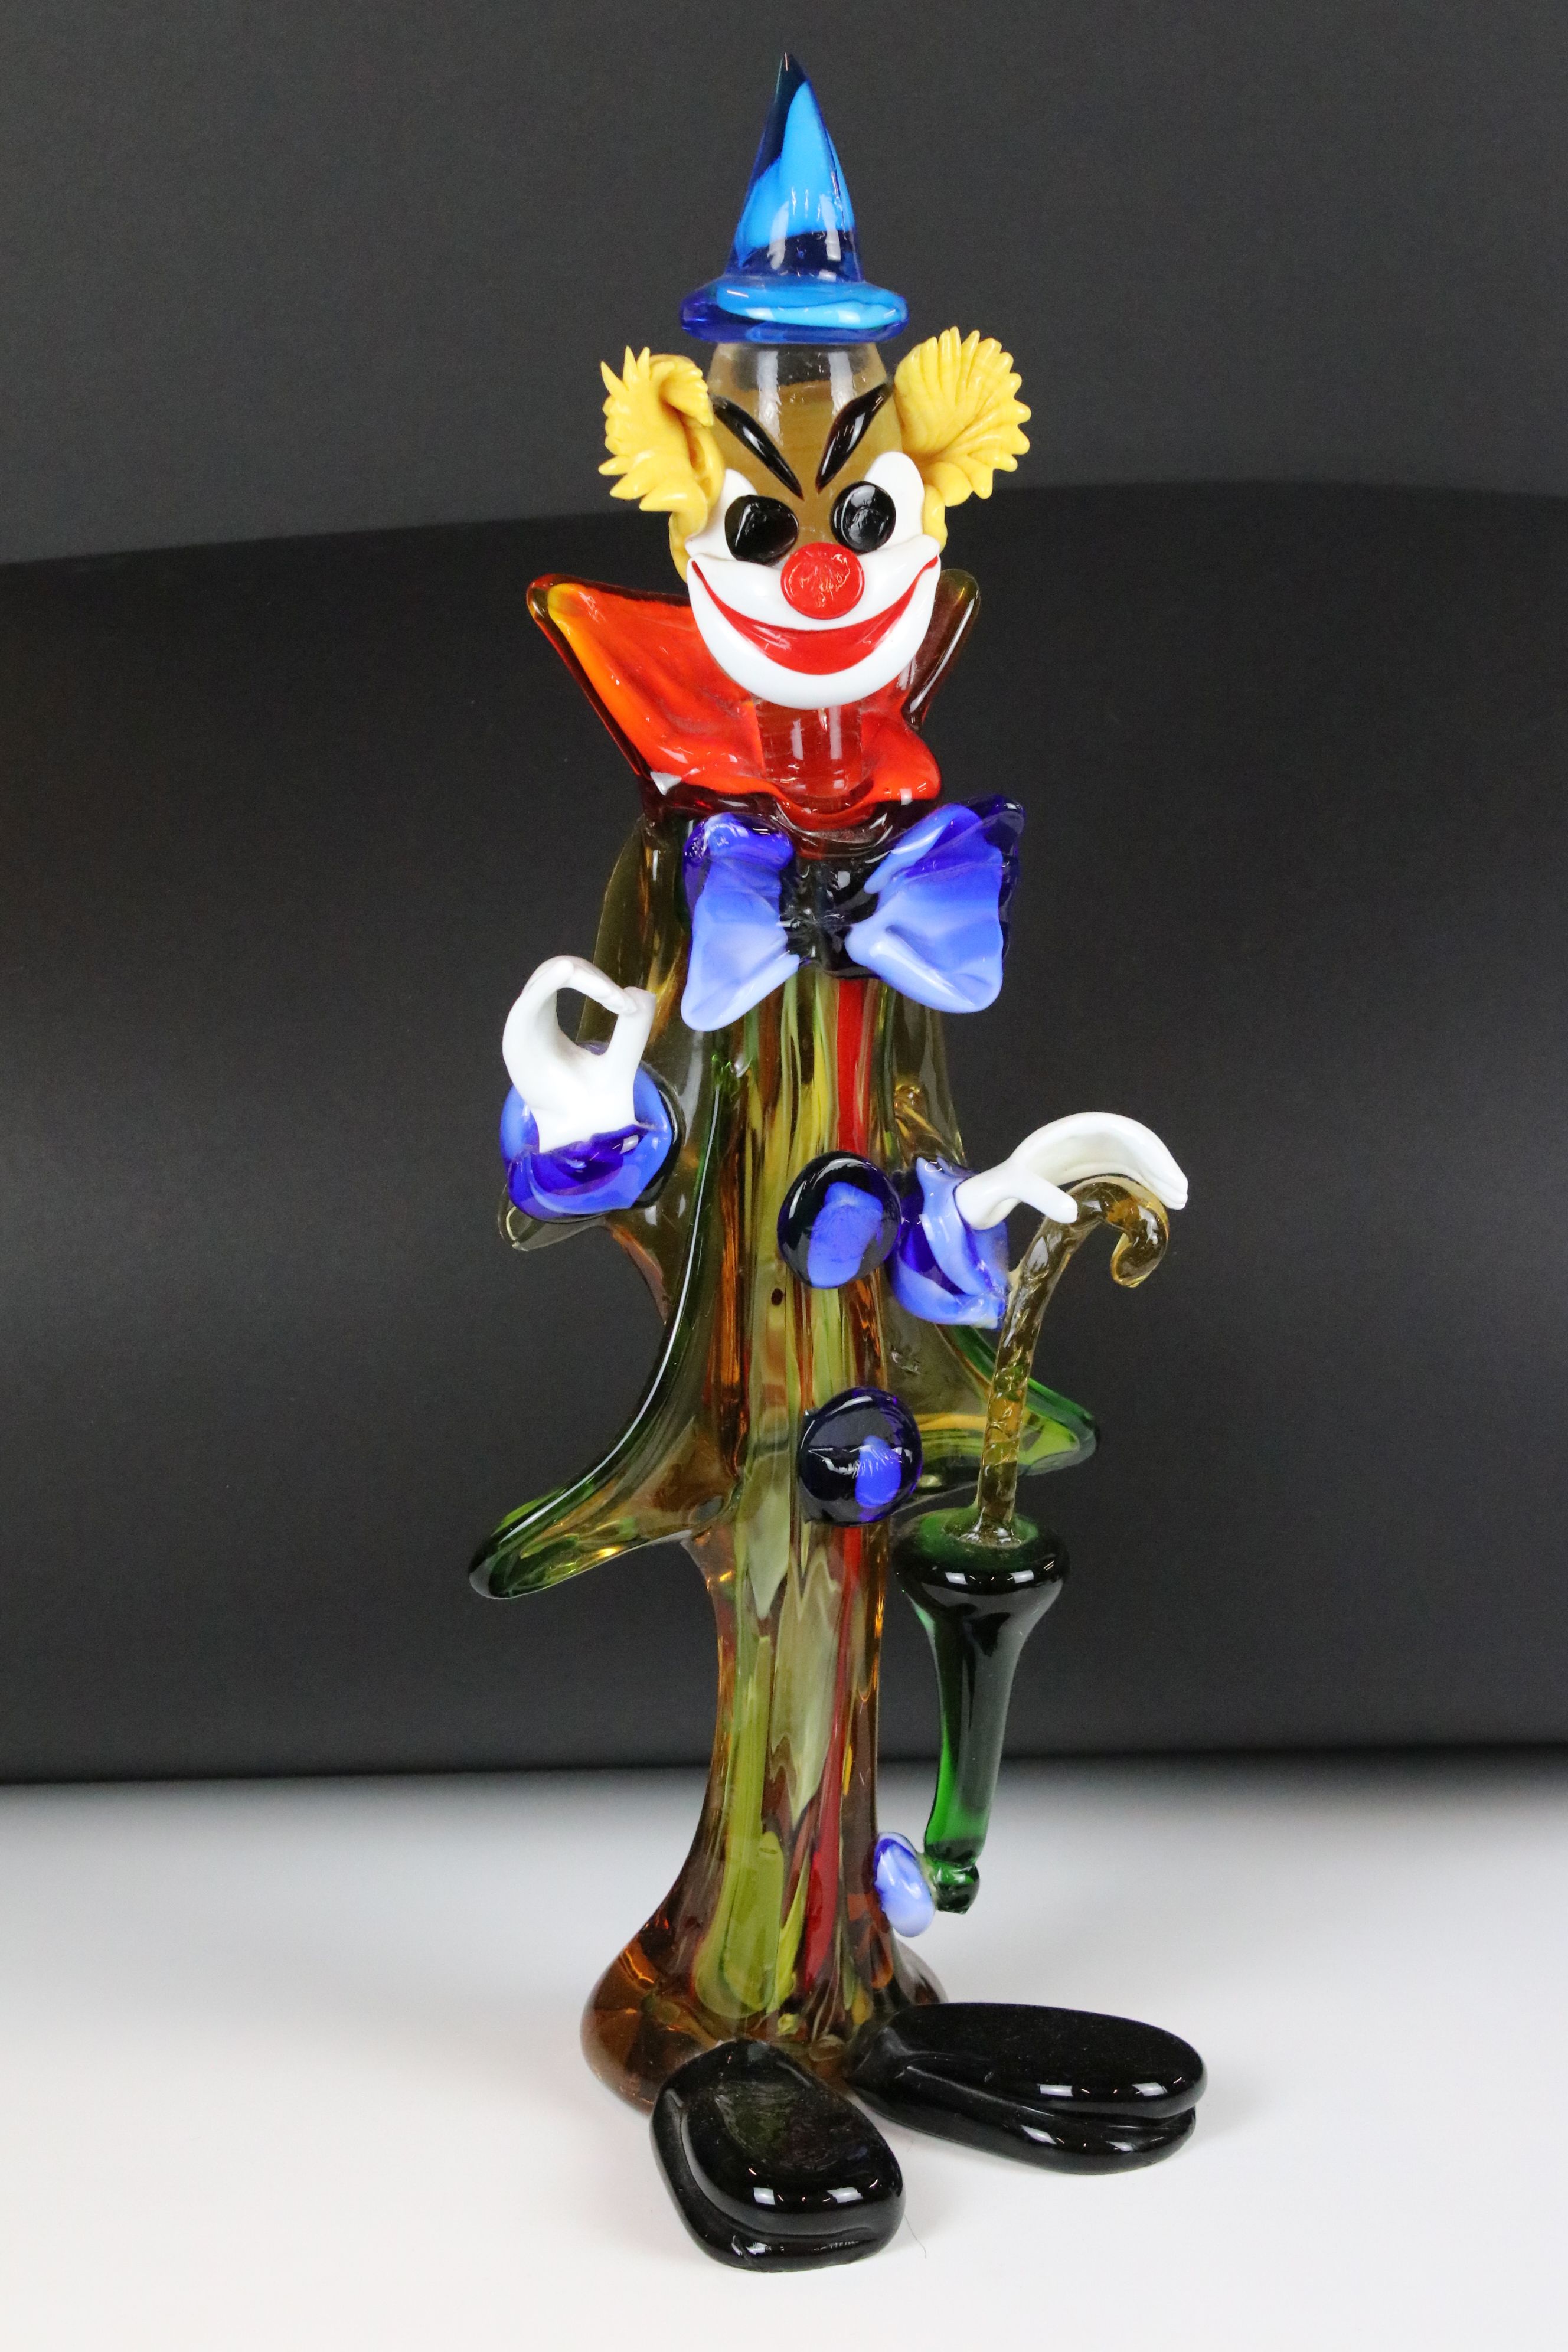 Murano Tall Coloured Glass Clown holding an Umbrella, 54cm high